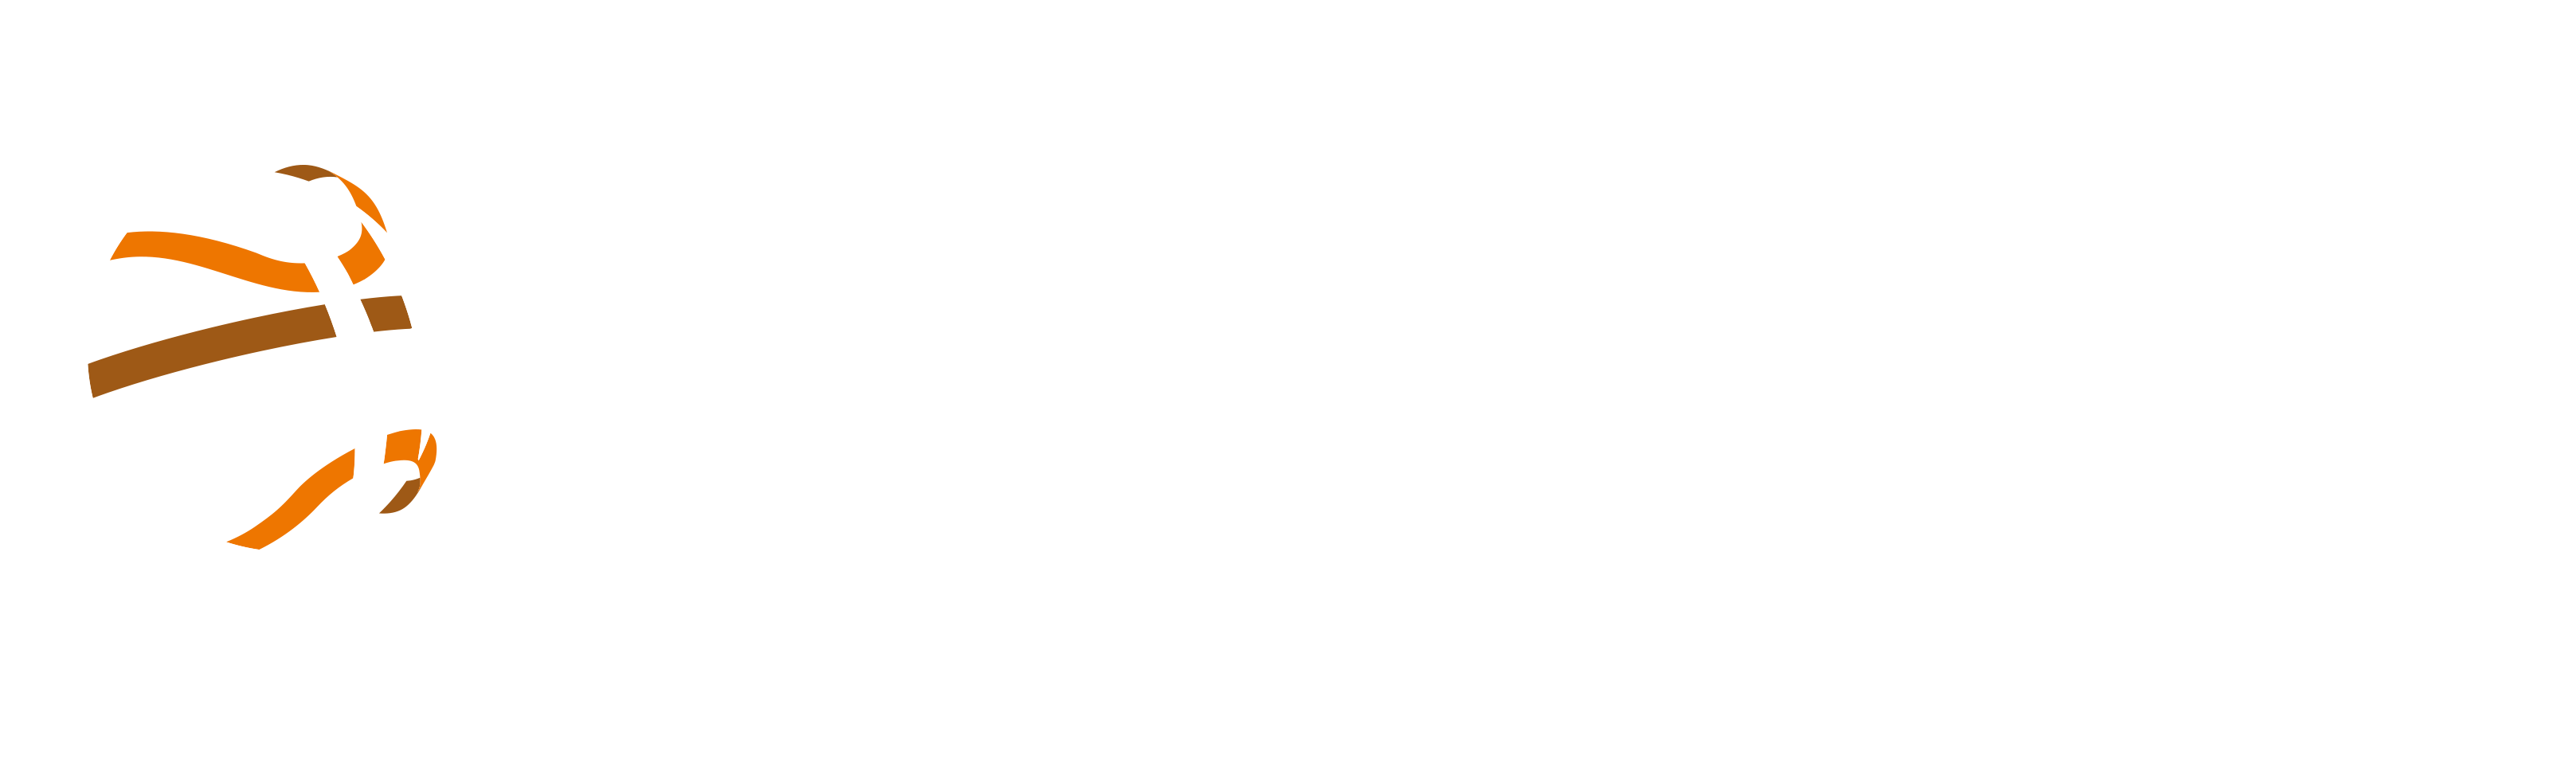 eurohoops.net logo